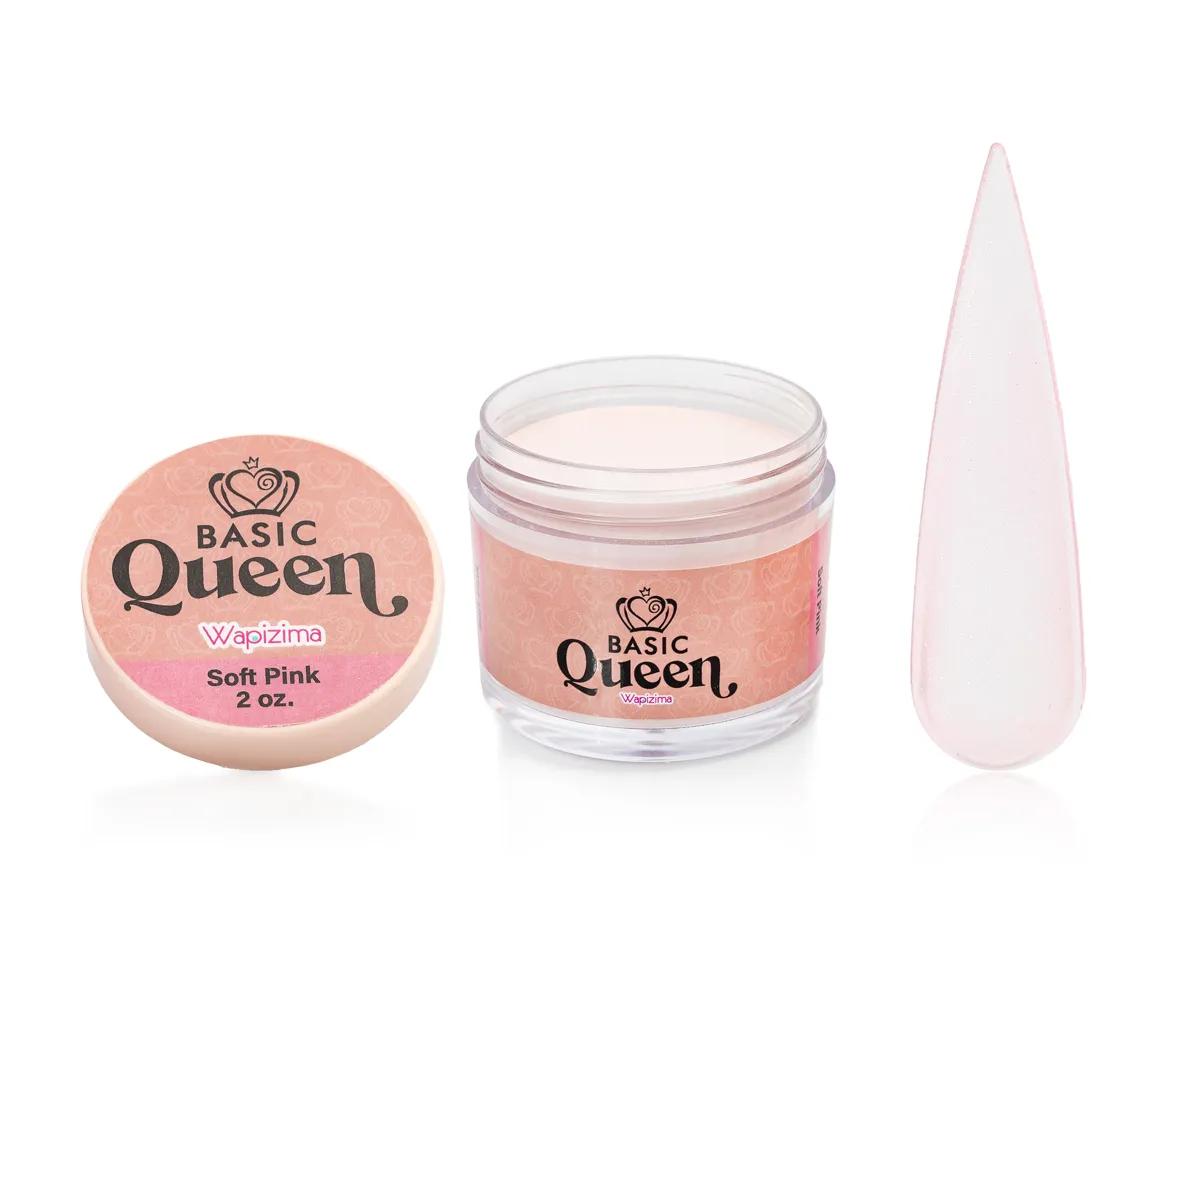 W.Basic Queen Soft Pink 2 oz